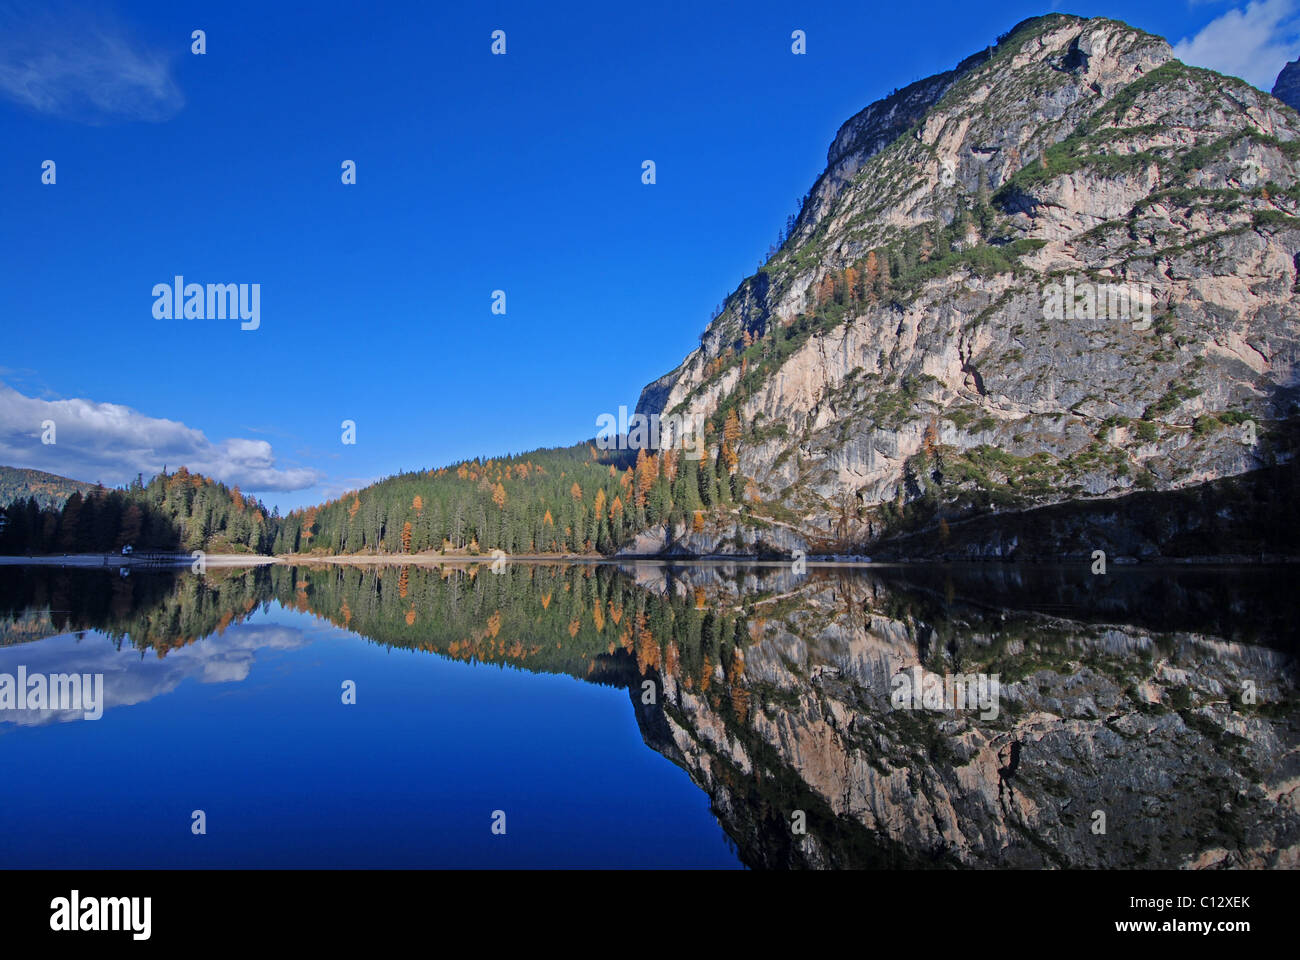 Pragser Wildsee, lago di braies, Alto Adige, Italy Stock Photo